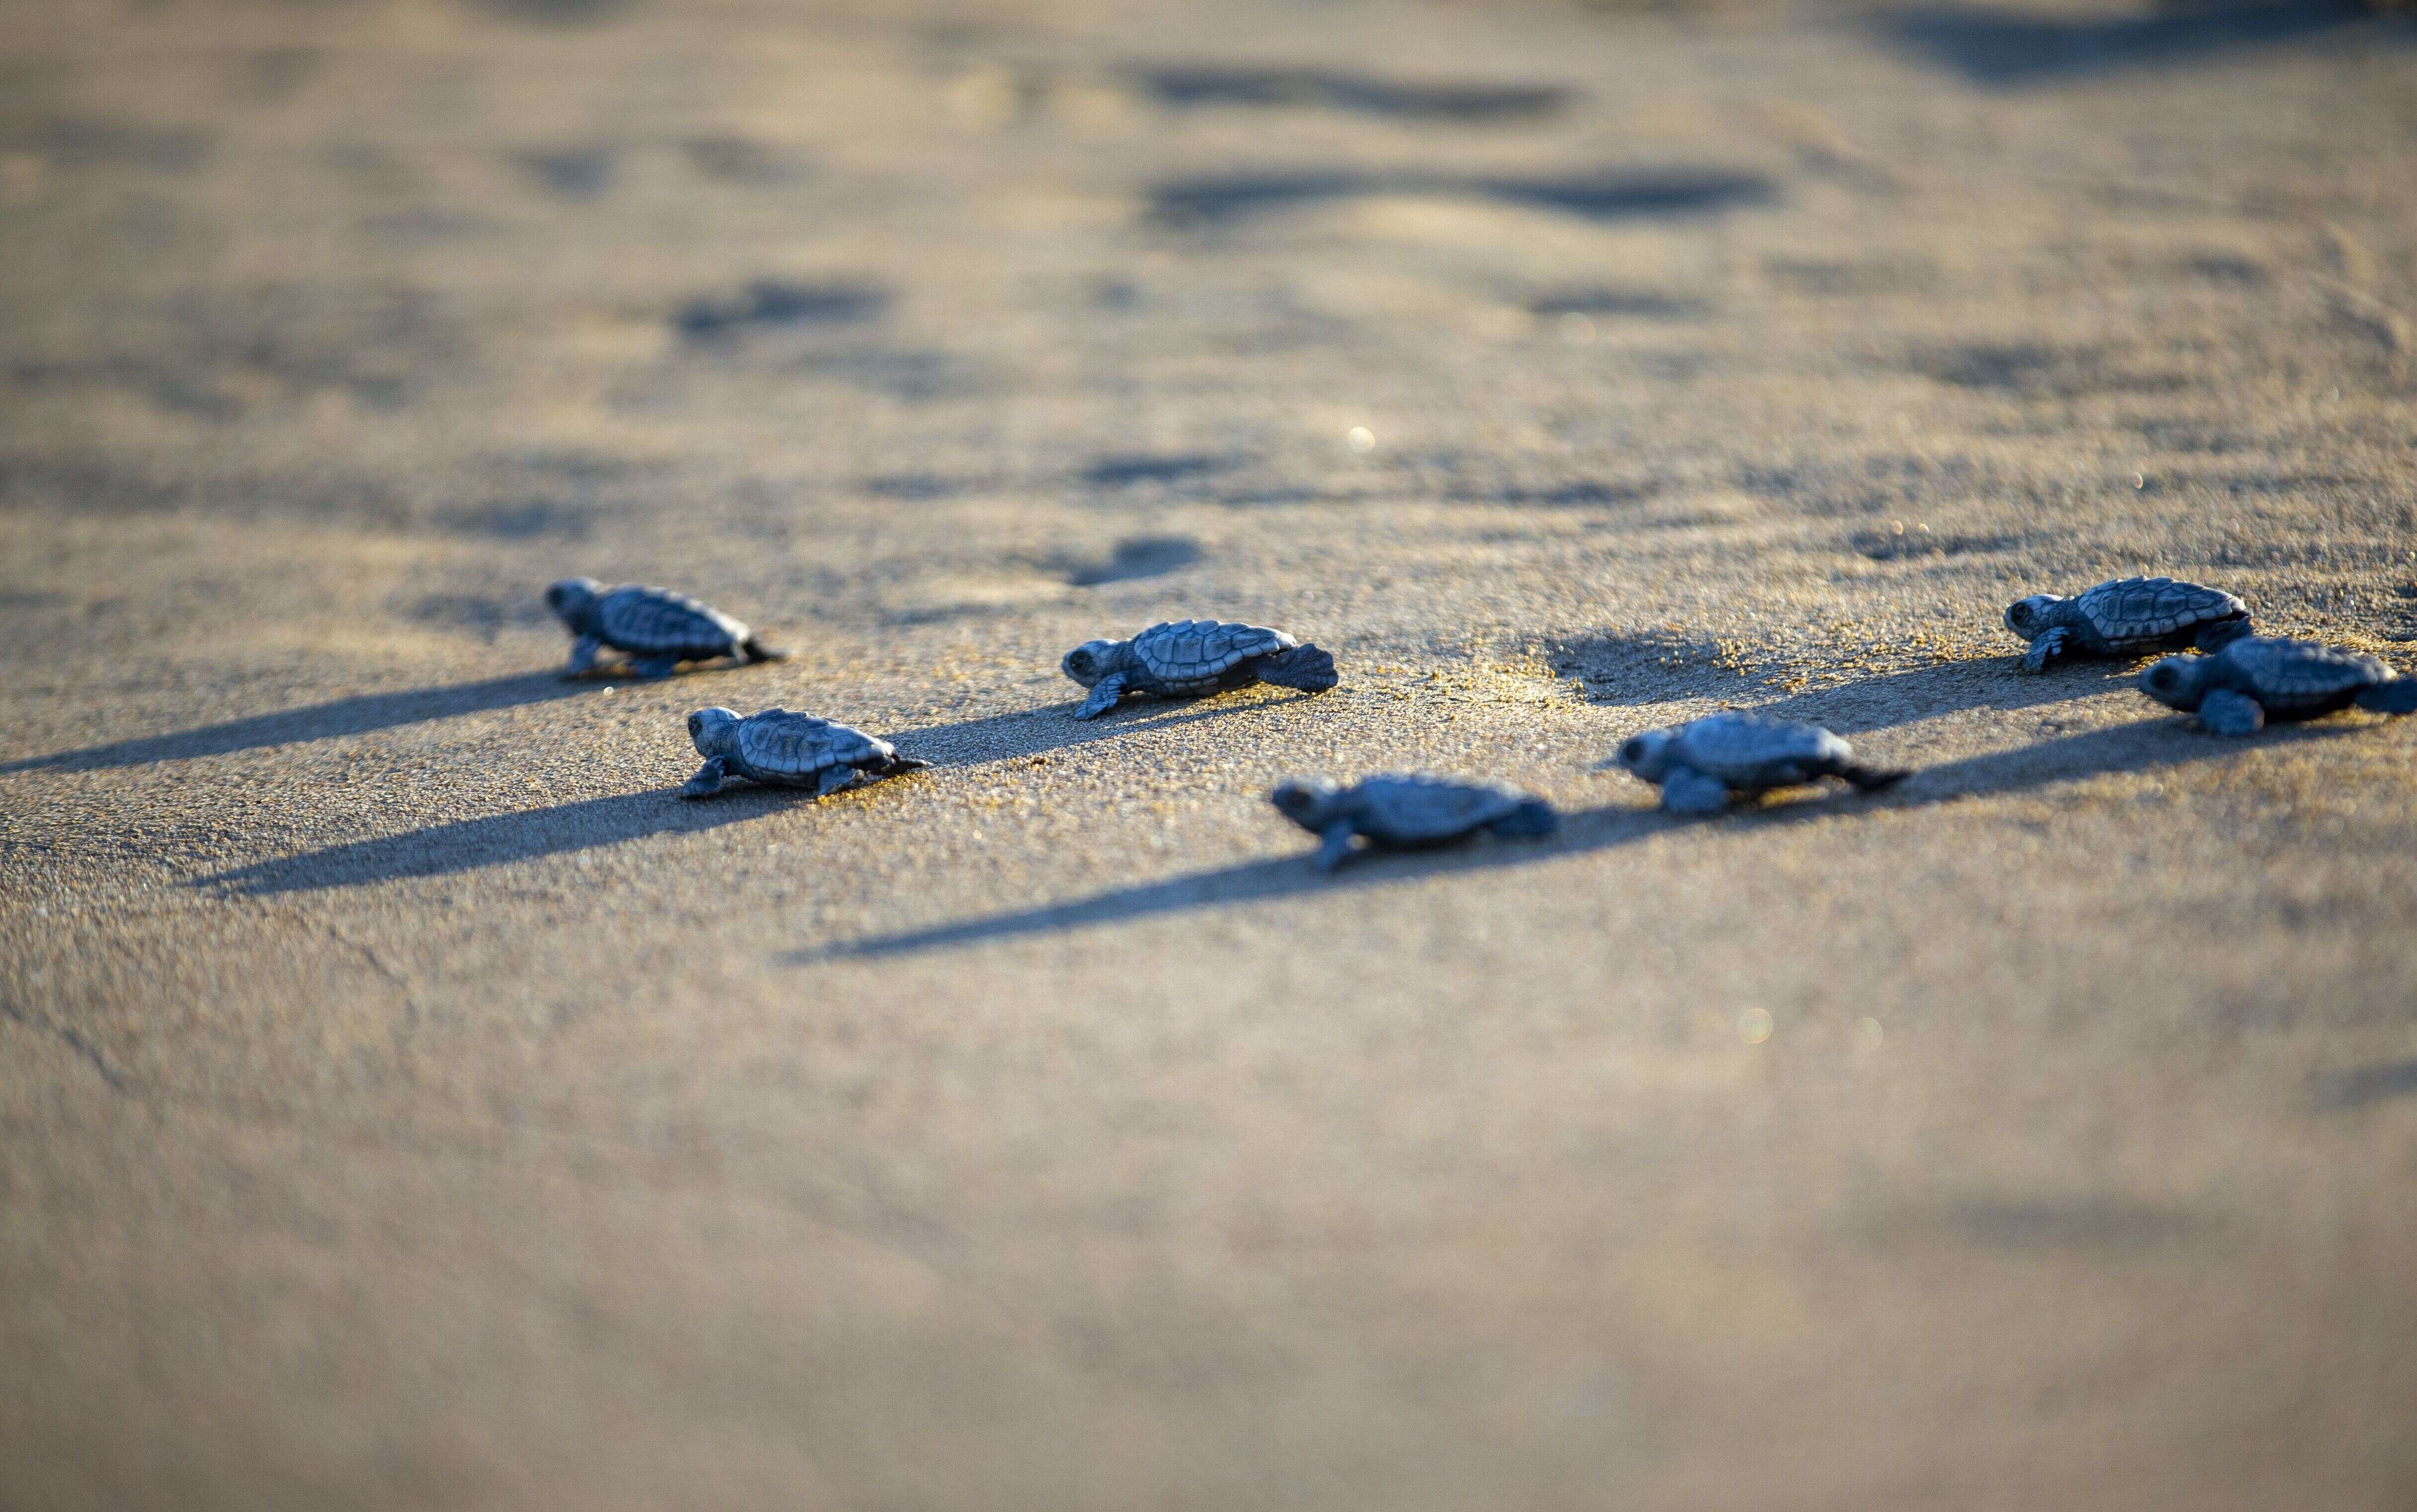 Un nid de Caretta Caretta peut compter jusqu'à 90 tortues. (Photo d'illustration)